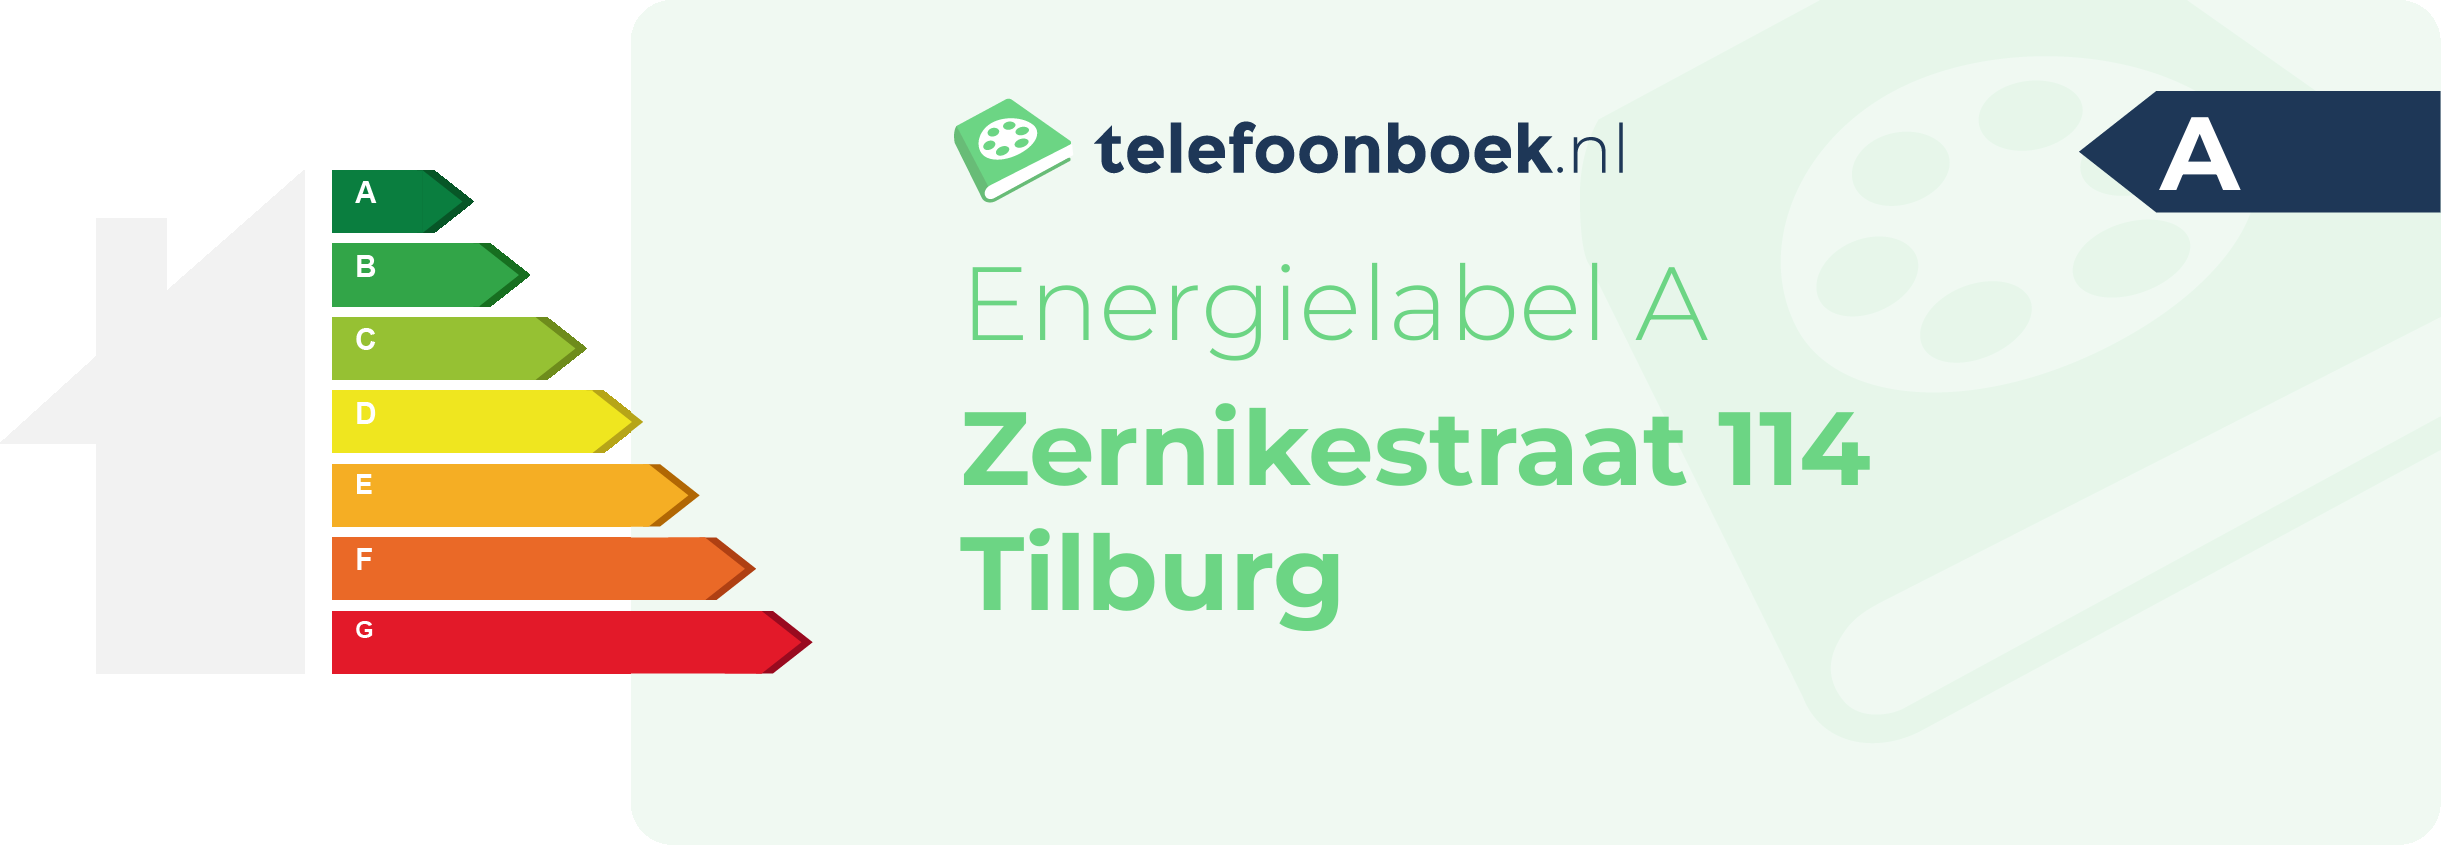 Energielabel Zernikestraat 114 Tilburg